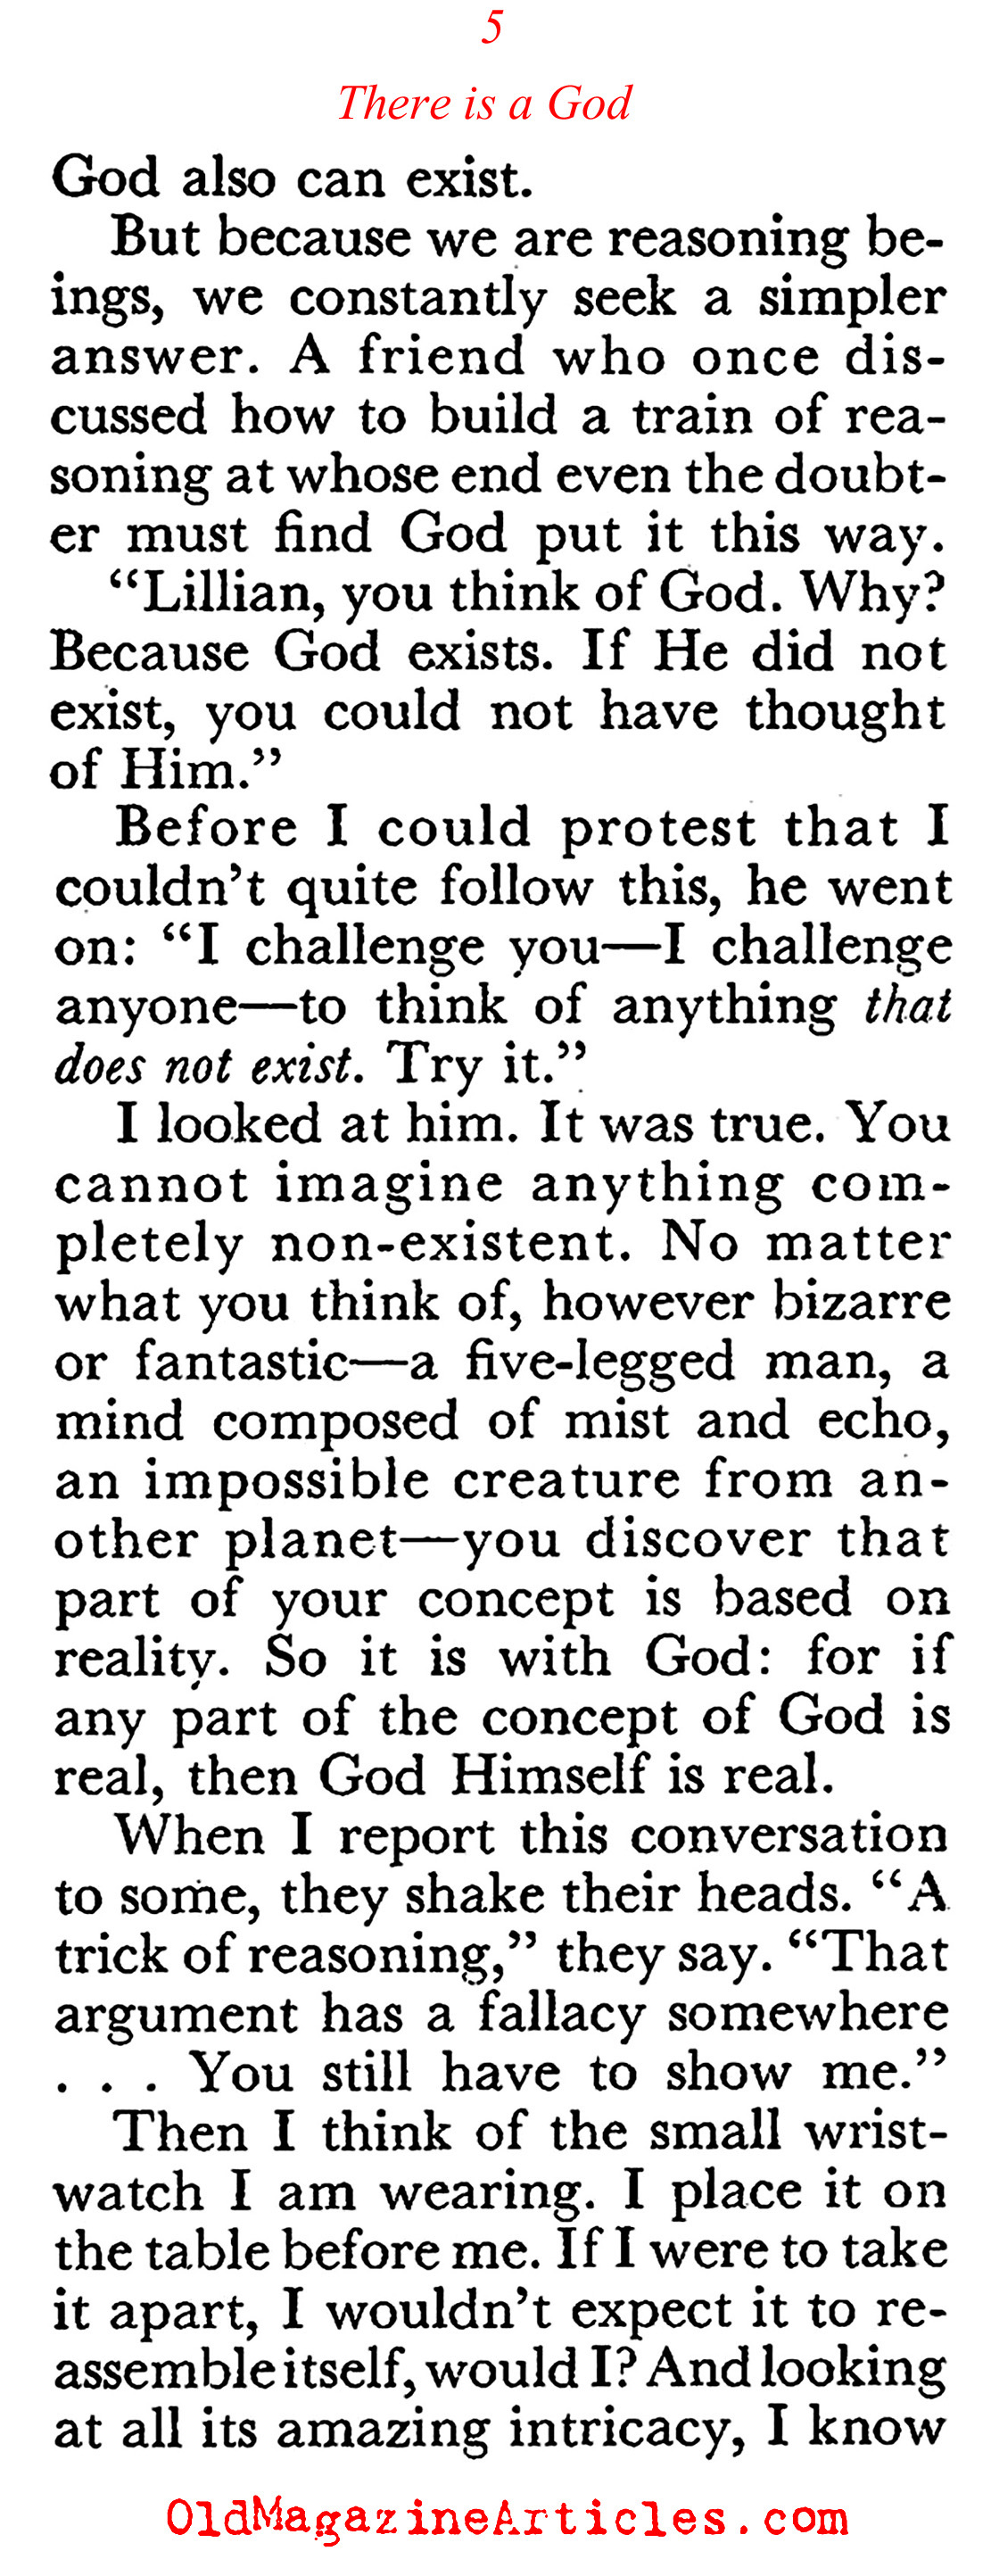 The Conversion of an Atheist (Coronet Magazine, 1955)